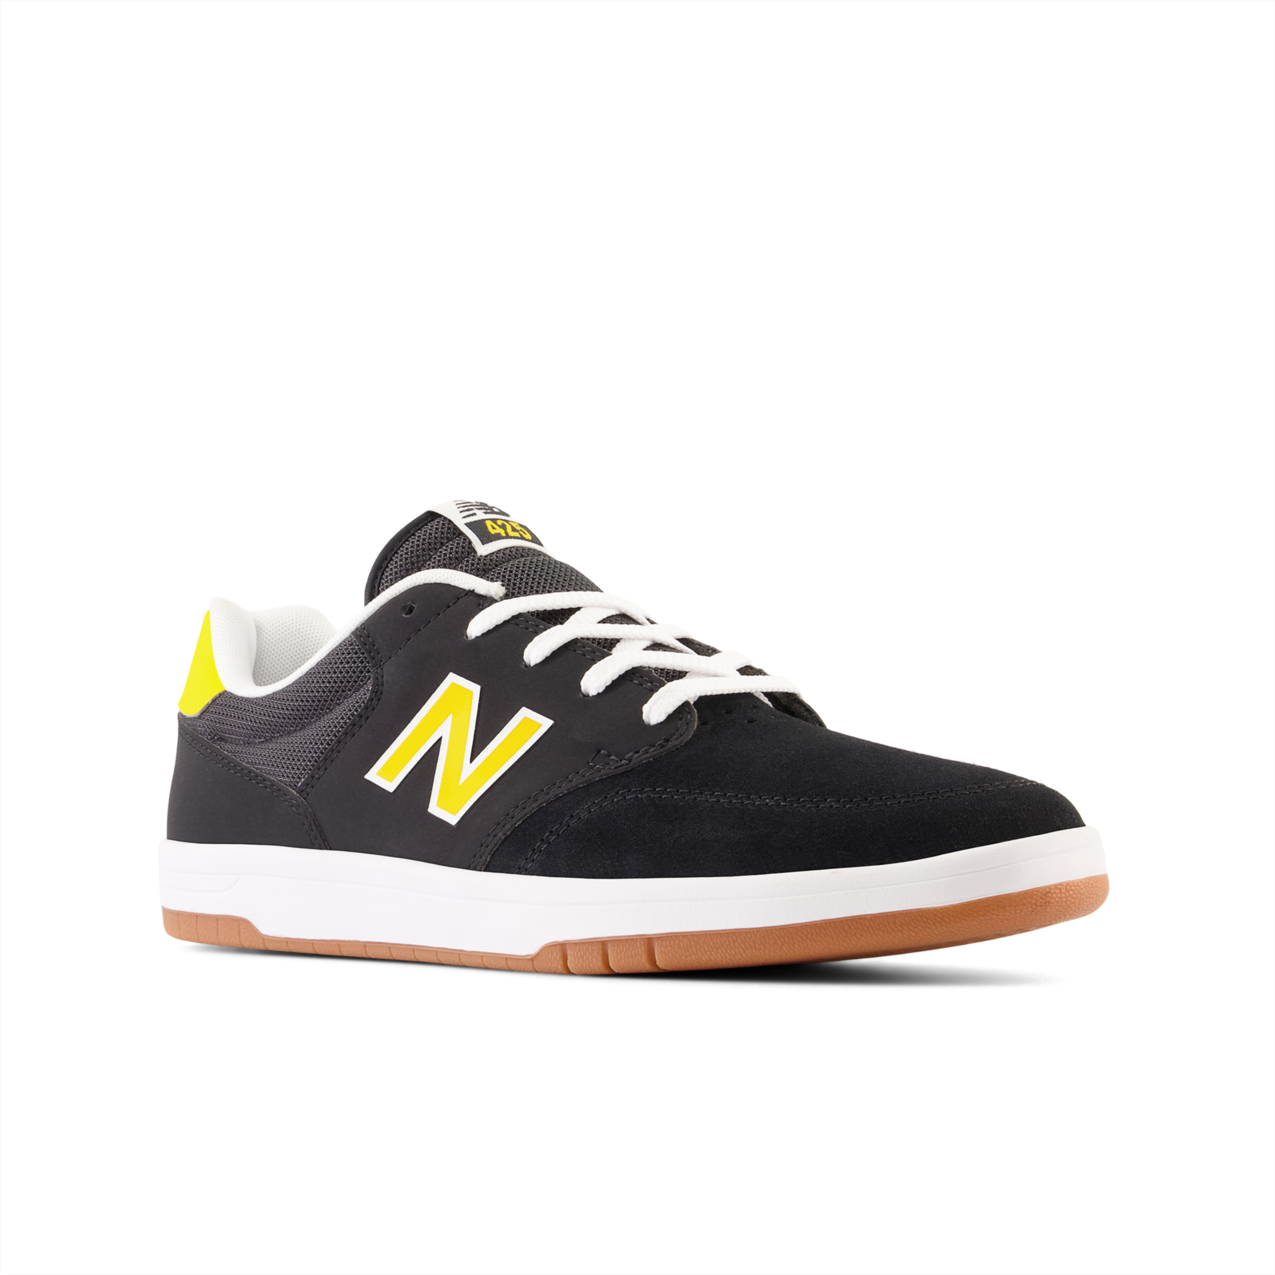 New Balance Numeric Men's 425 Black Yellow Shoes